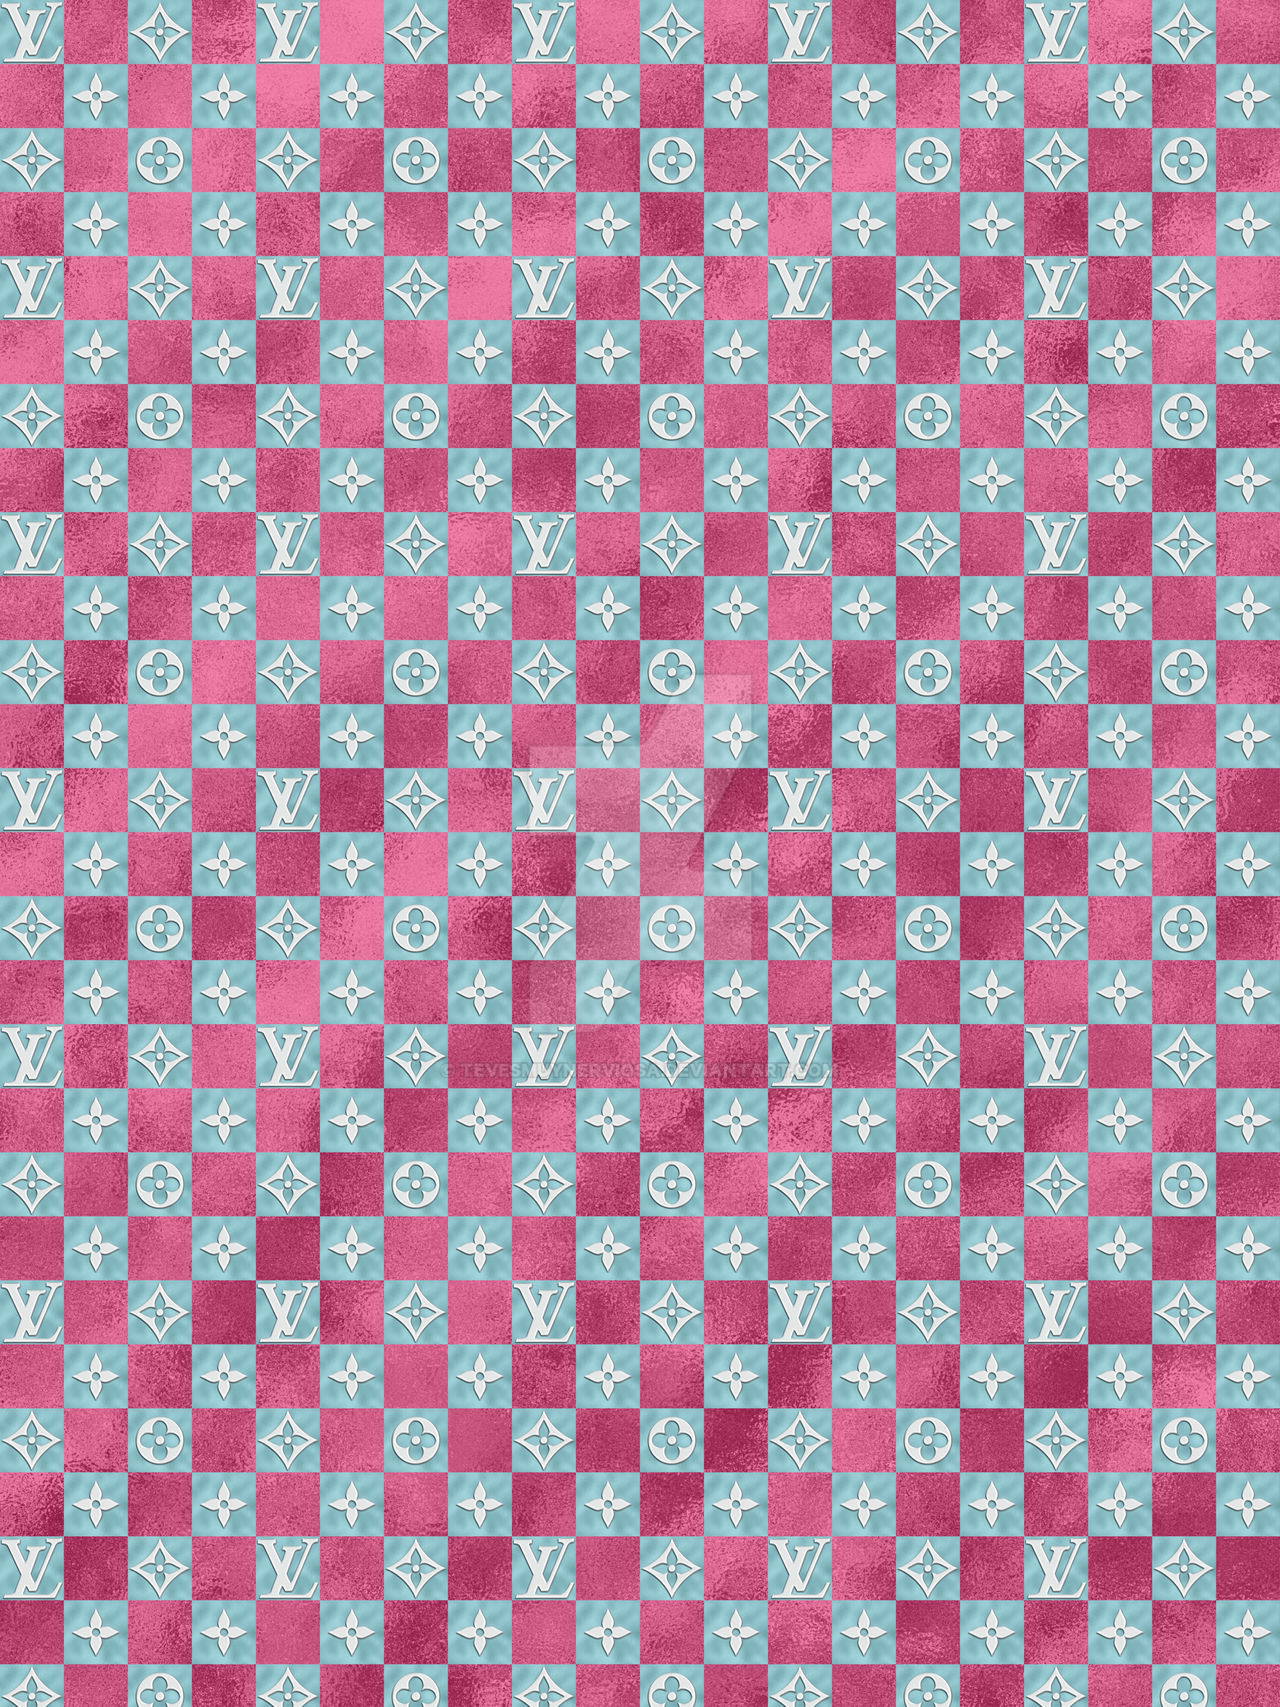 LV 2022 New Wallpaper in Pink - Free Download by TeVesMuyNerviosa on  DeviantArt